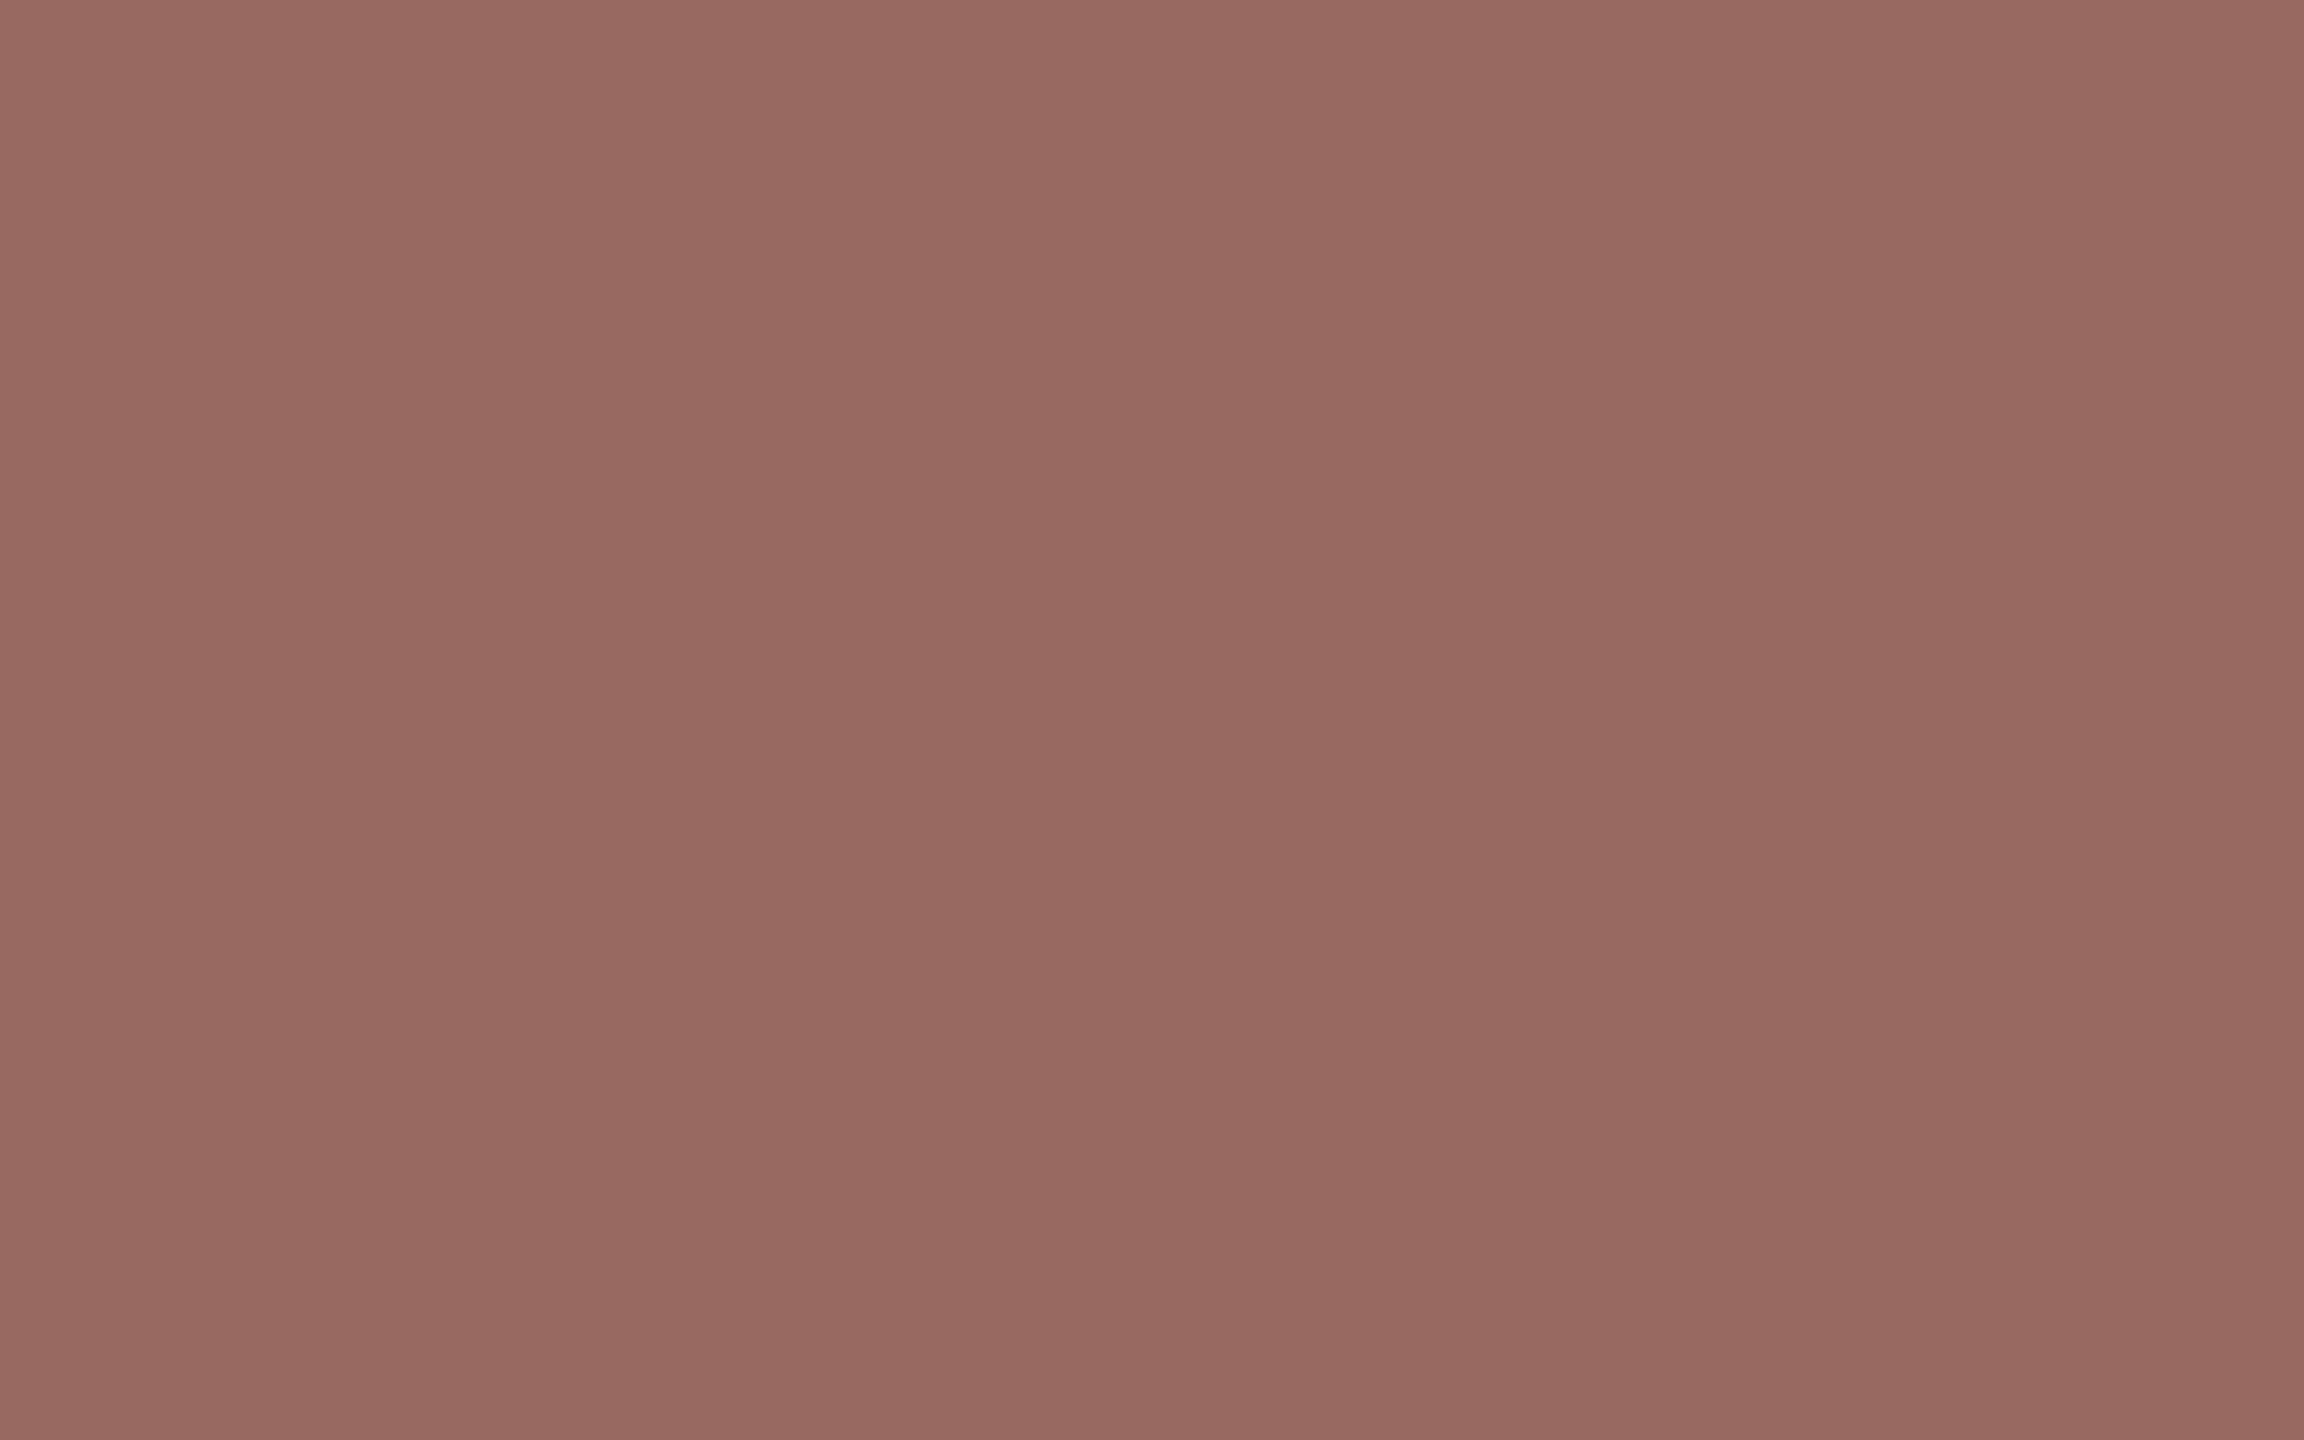 2304x1440 Dark Chestnut Solid Color Background